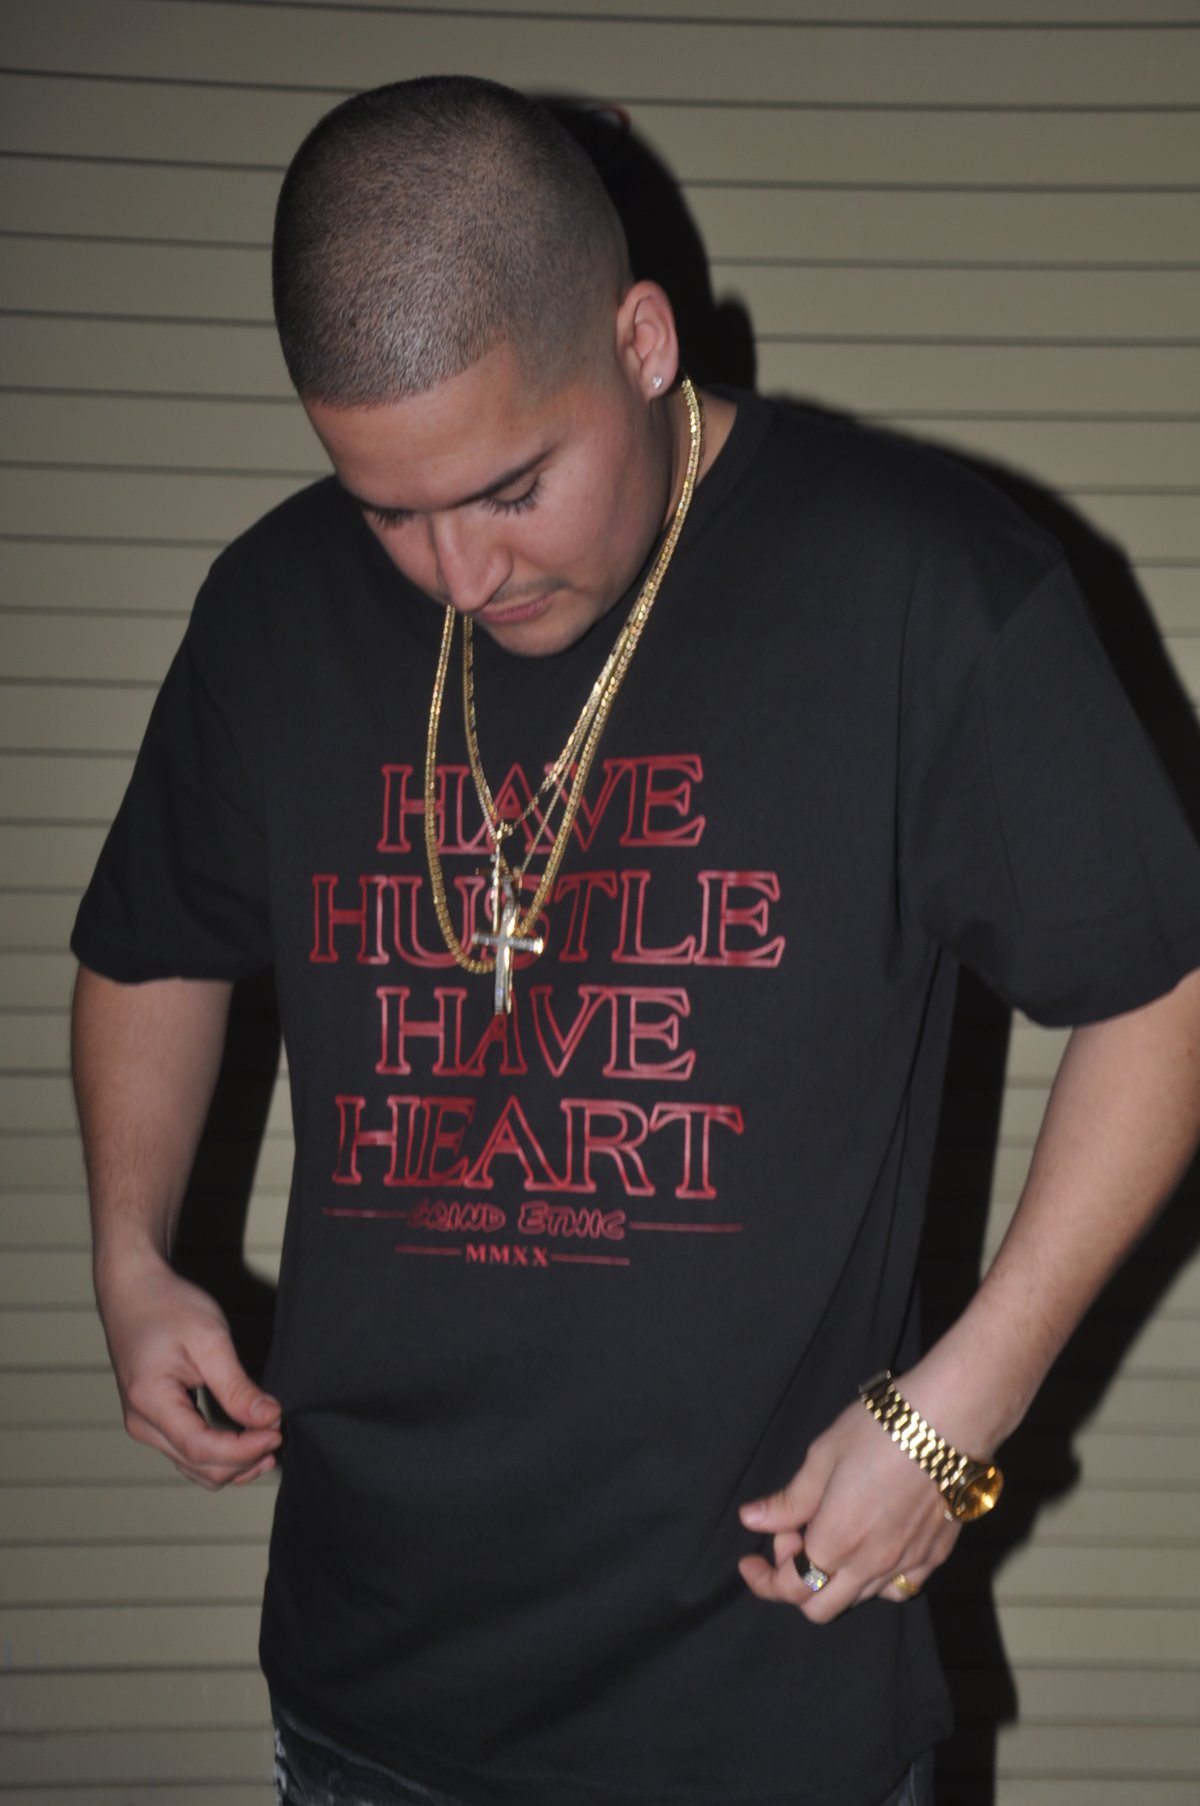 Have Hustle Have Heart Mens Crewneck T-Shirt